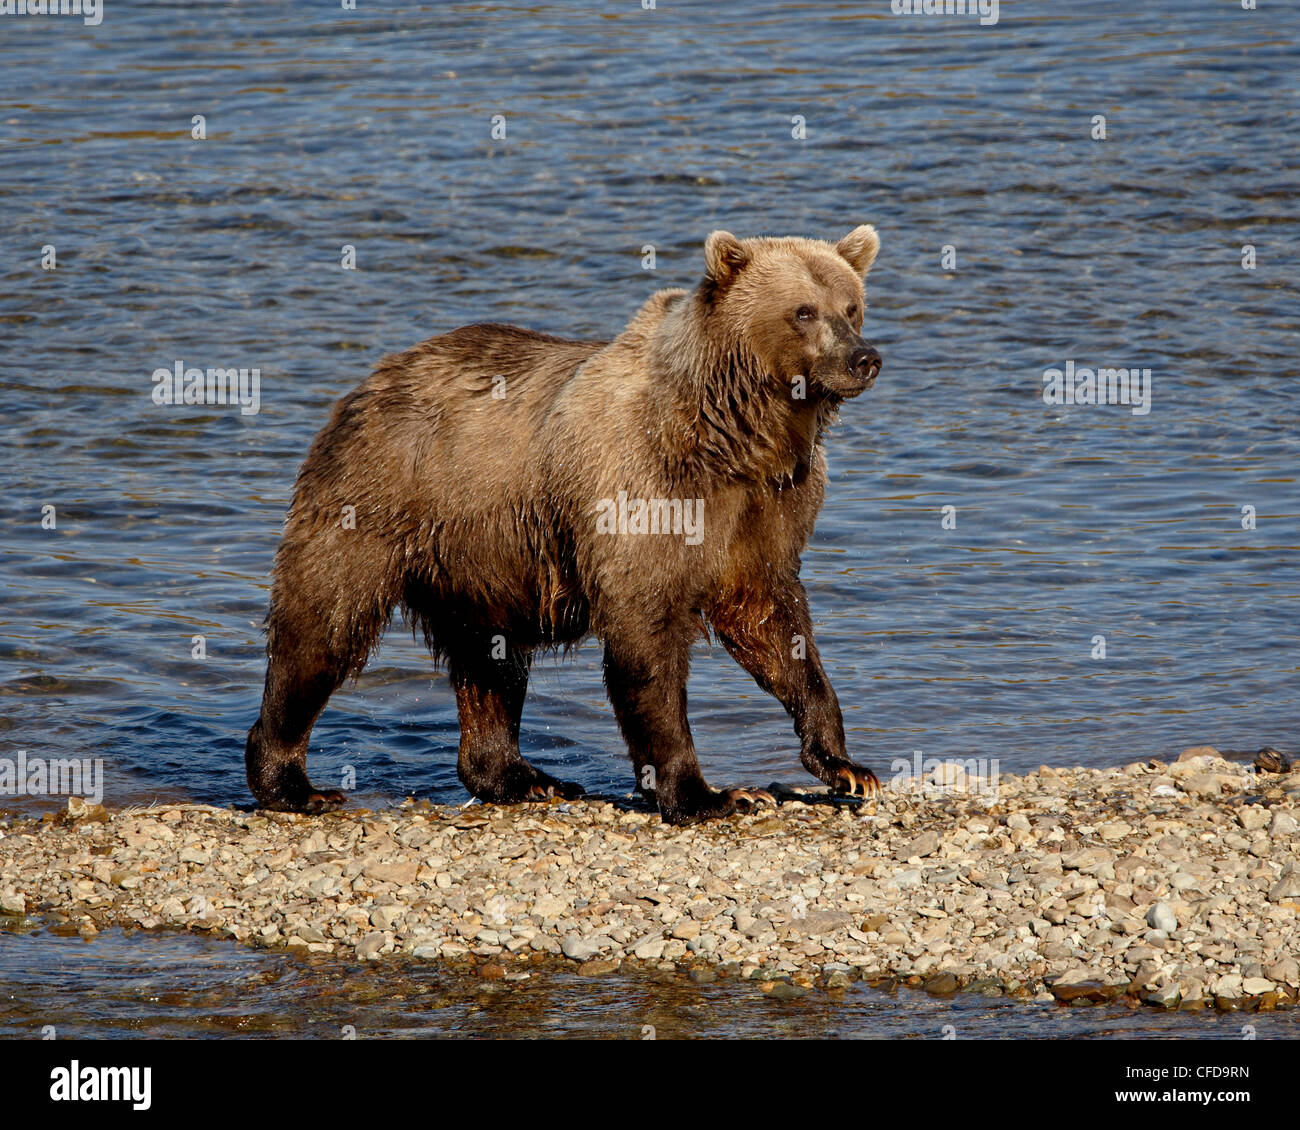 Grizzly bear (Ursus arctos horribilis) (Coastal brown bear), Katmai National Park and Preserve, Alaska, United States of America Stock Photo